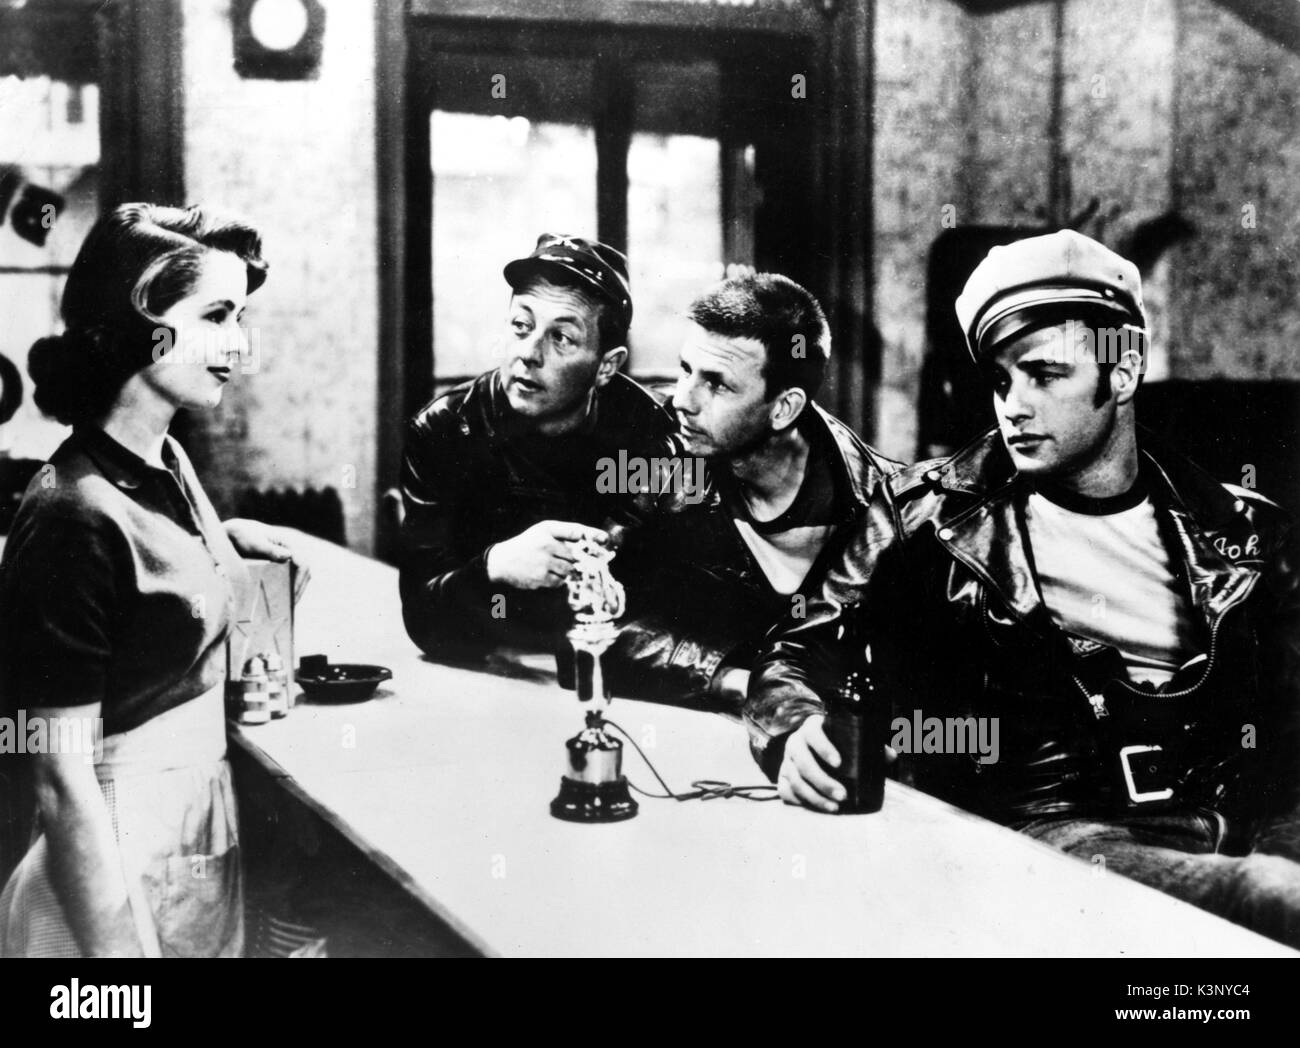 THE WILD ONE [US 1953] MARY MURPHY [left],[?], ALVY MOORE MARLON BRANDO [far right]     Date: 1953 Stock Photo